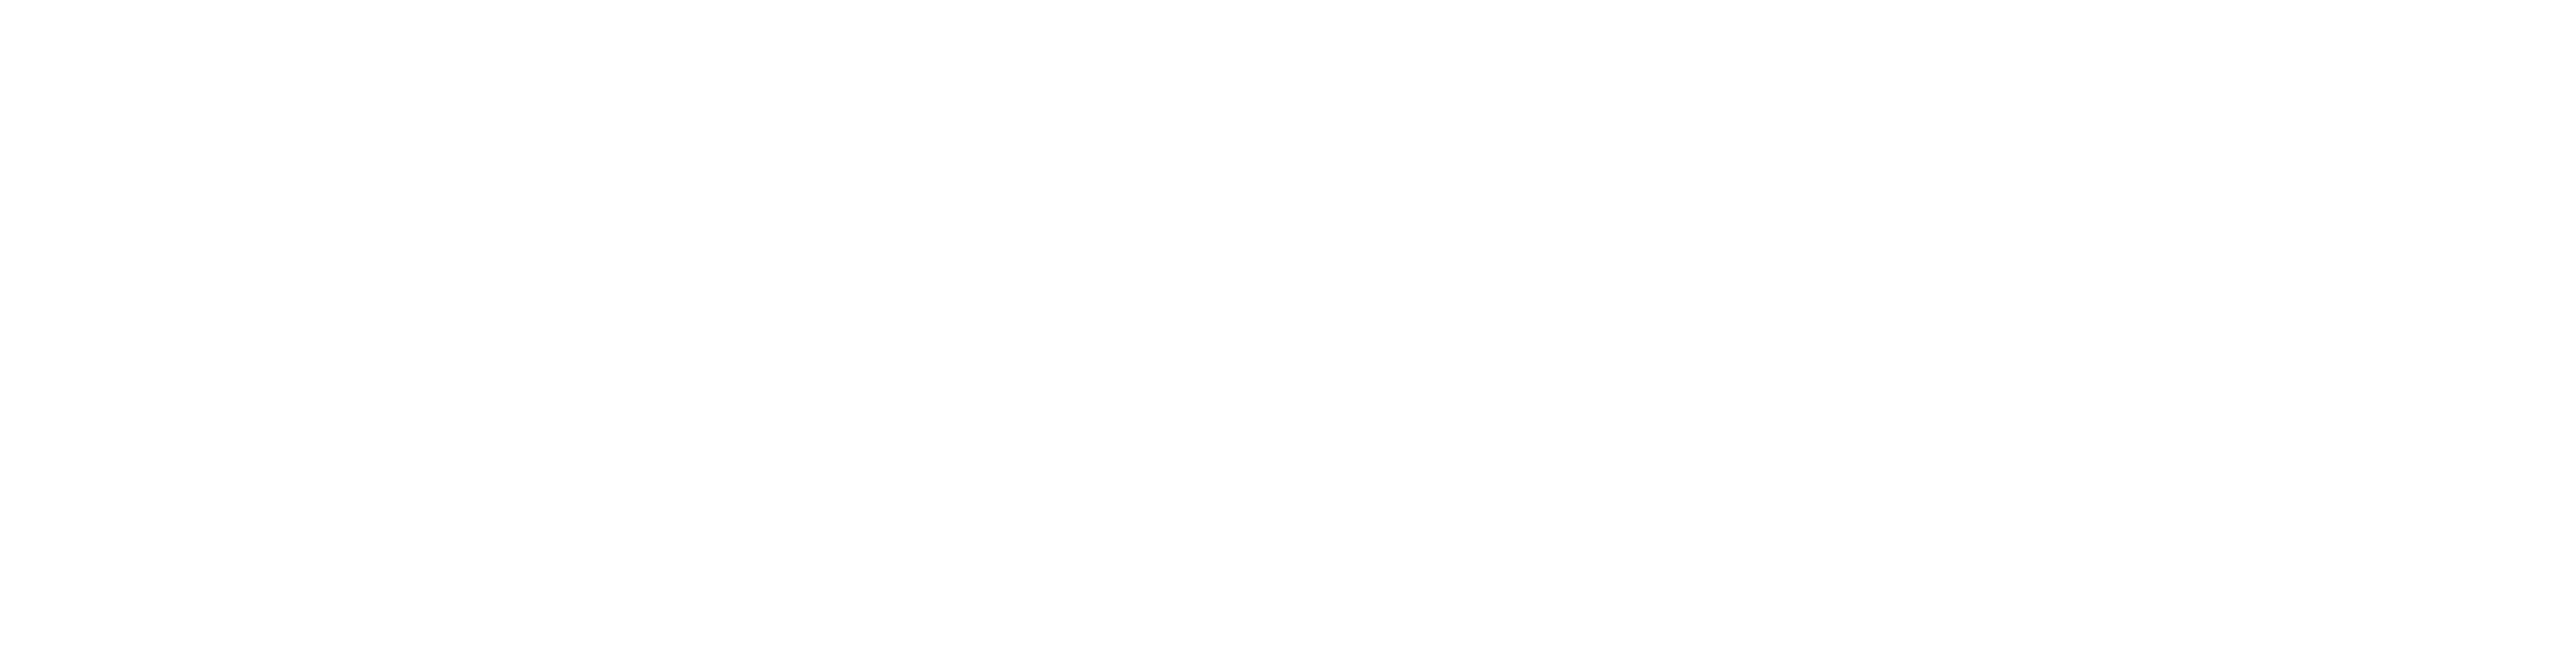 Entity-IT | Future depends on IT